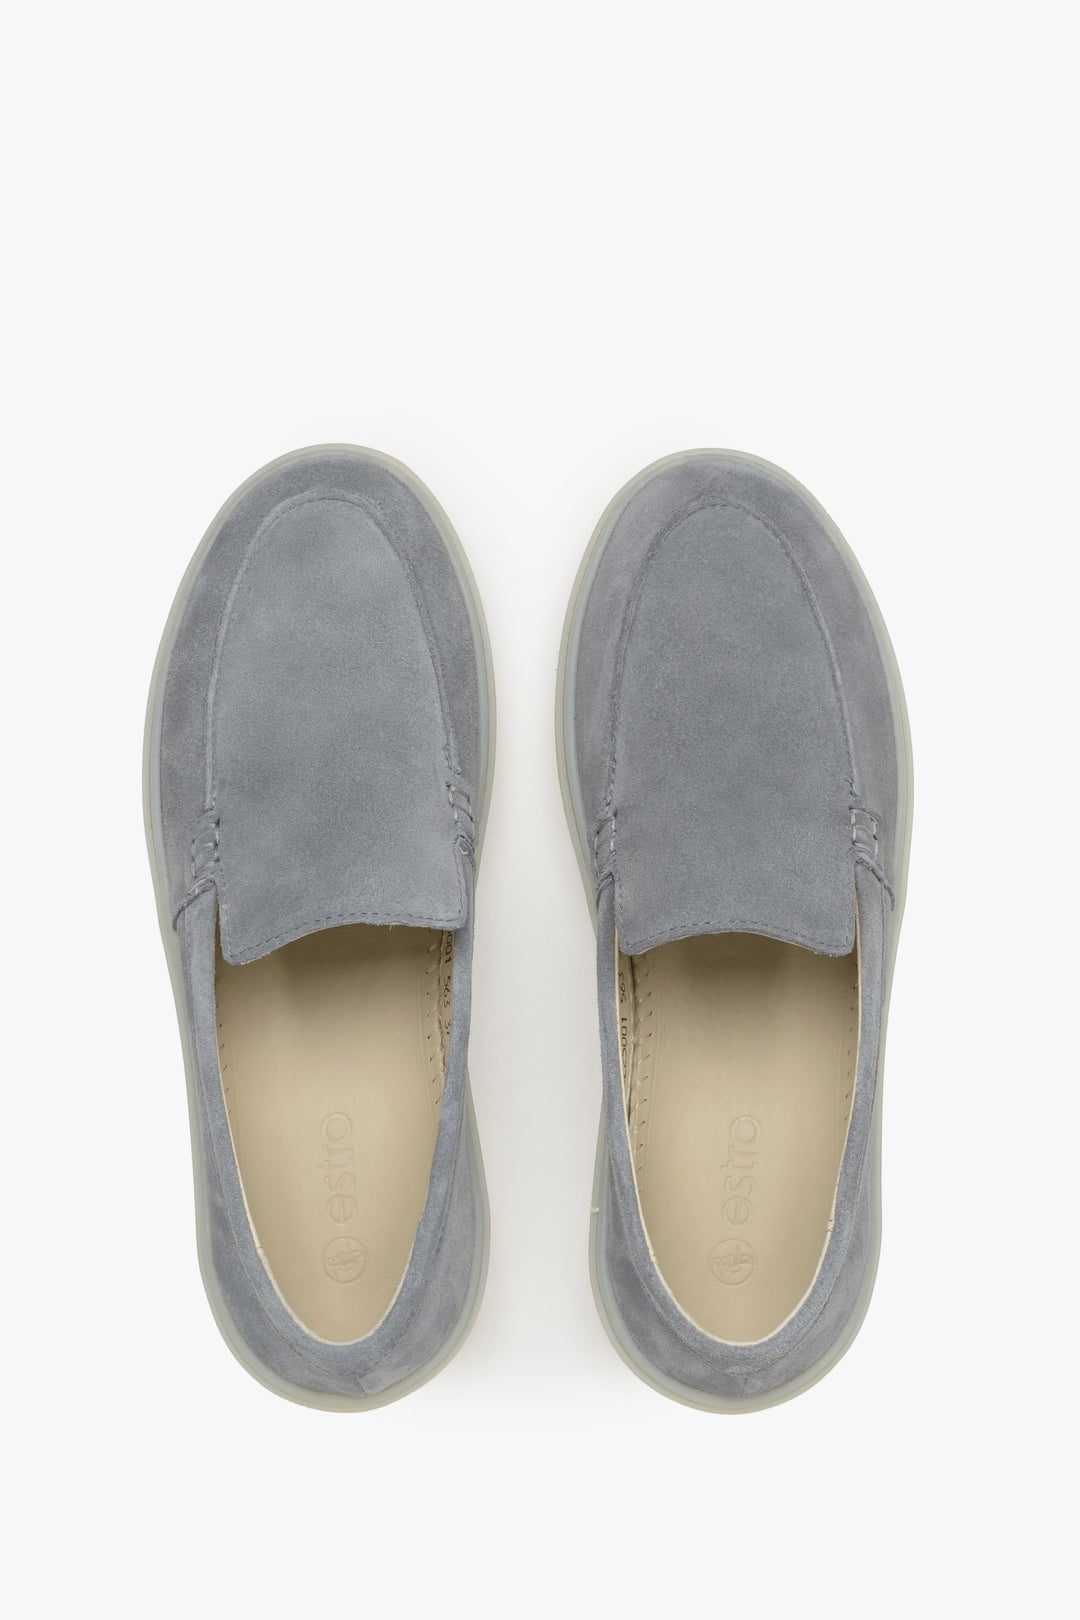 Women's grey loafers made of premium Italian velour.